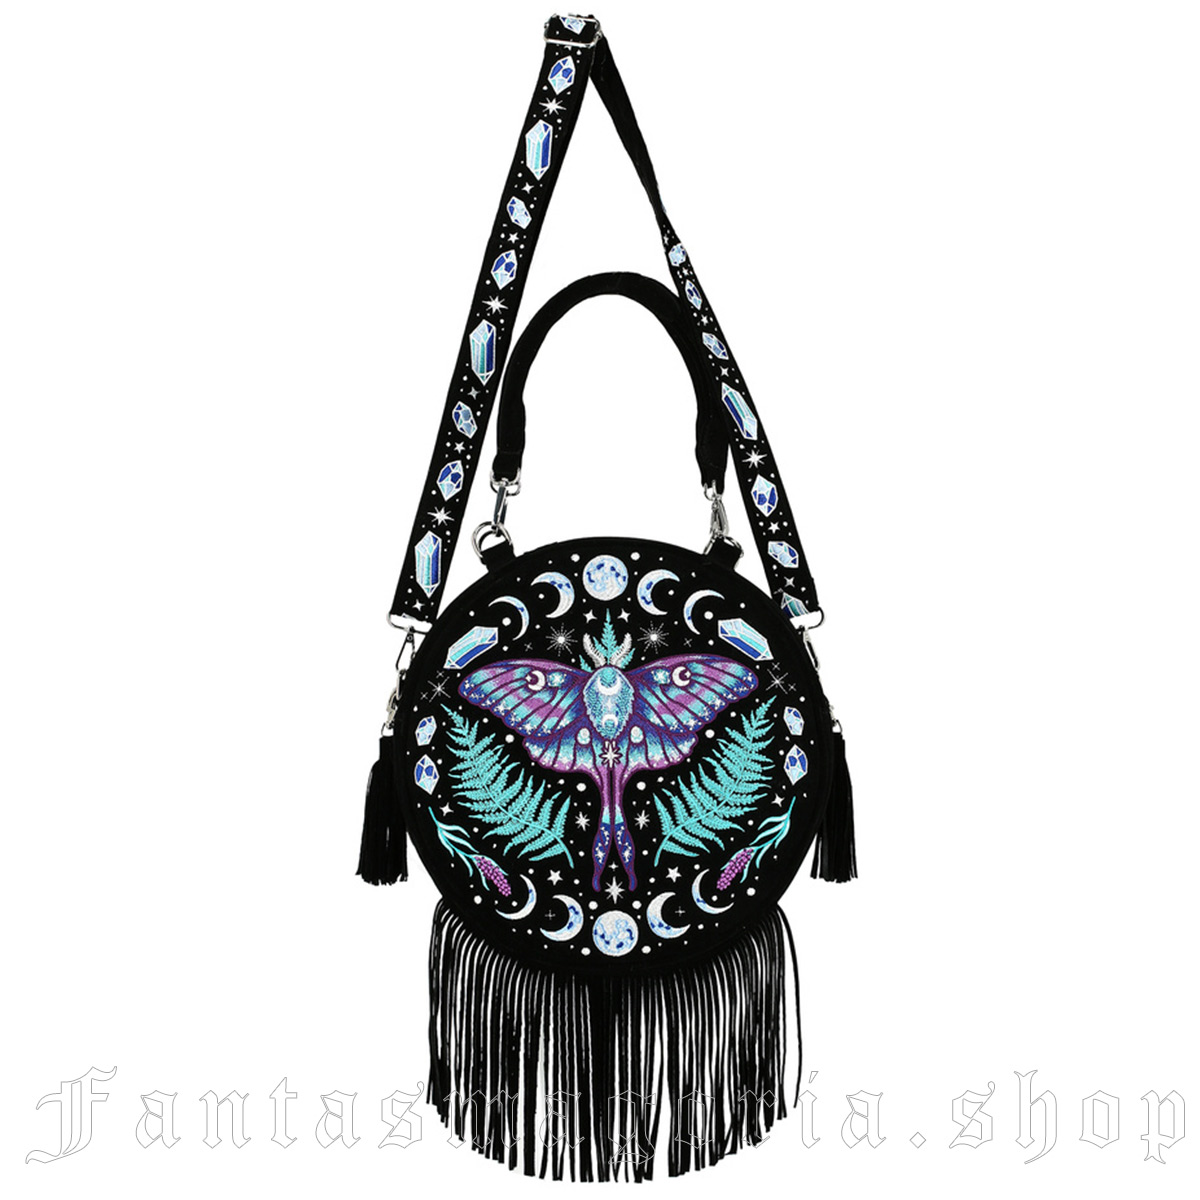 Gothic black round embroidered shoulder bag. - Restyle - RES5900949919522